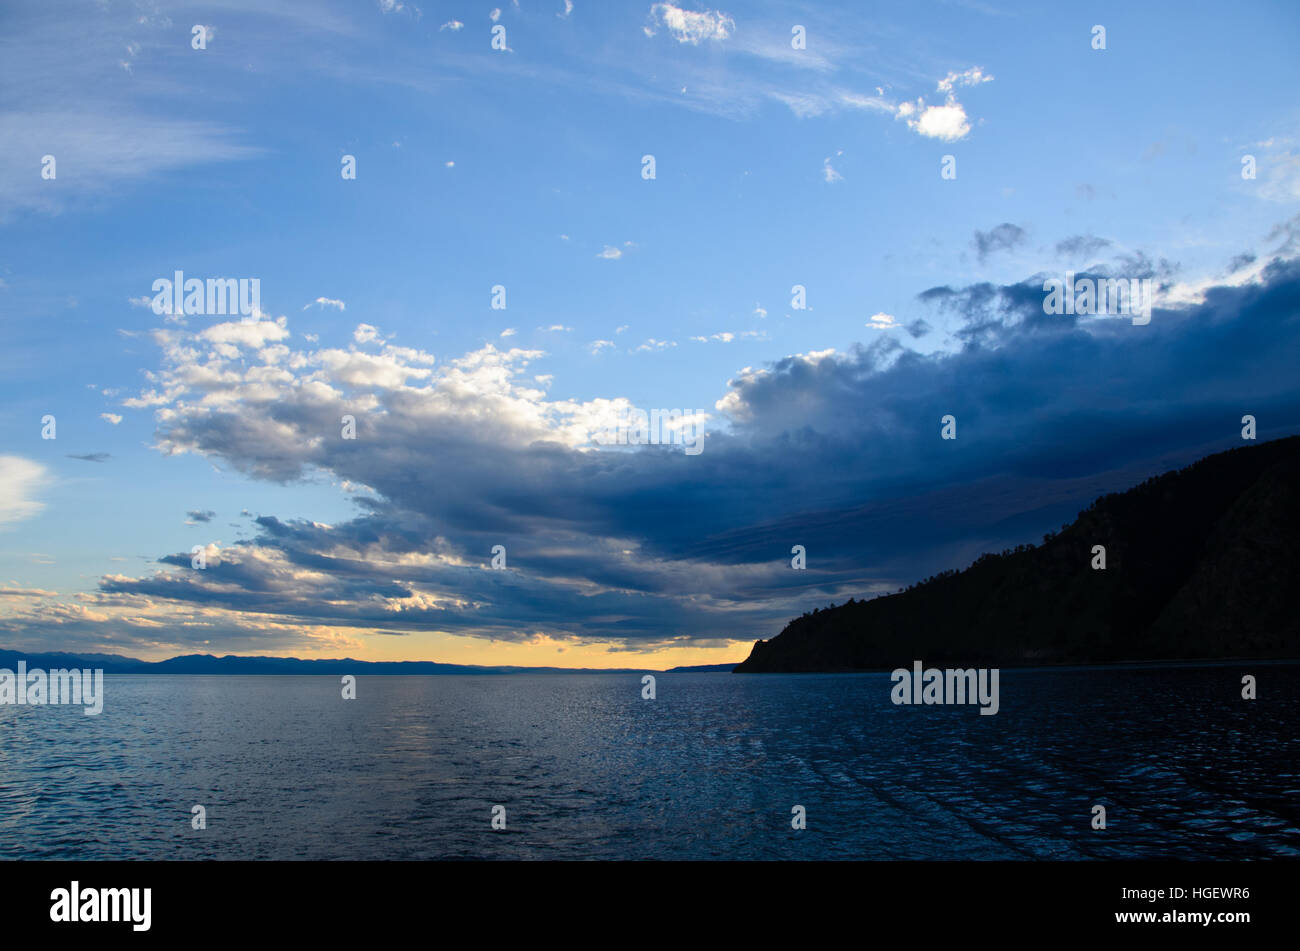 The serenity of Lake Baikal Stock Photo